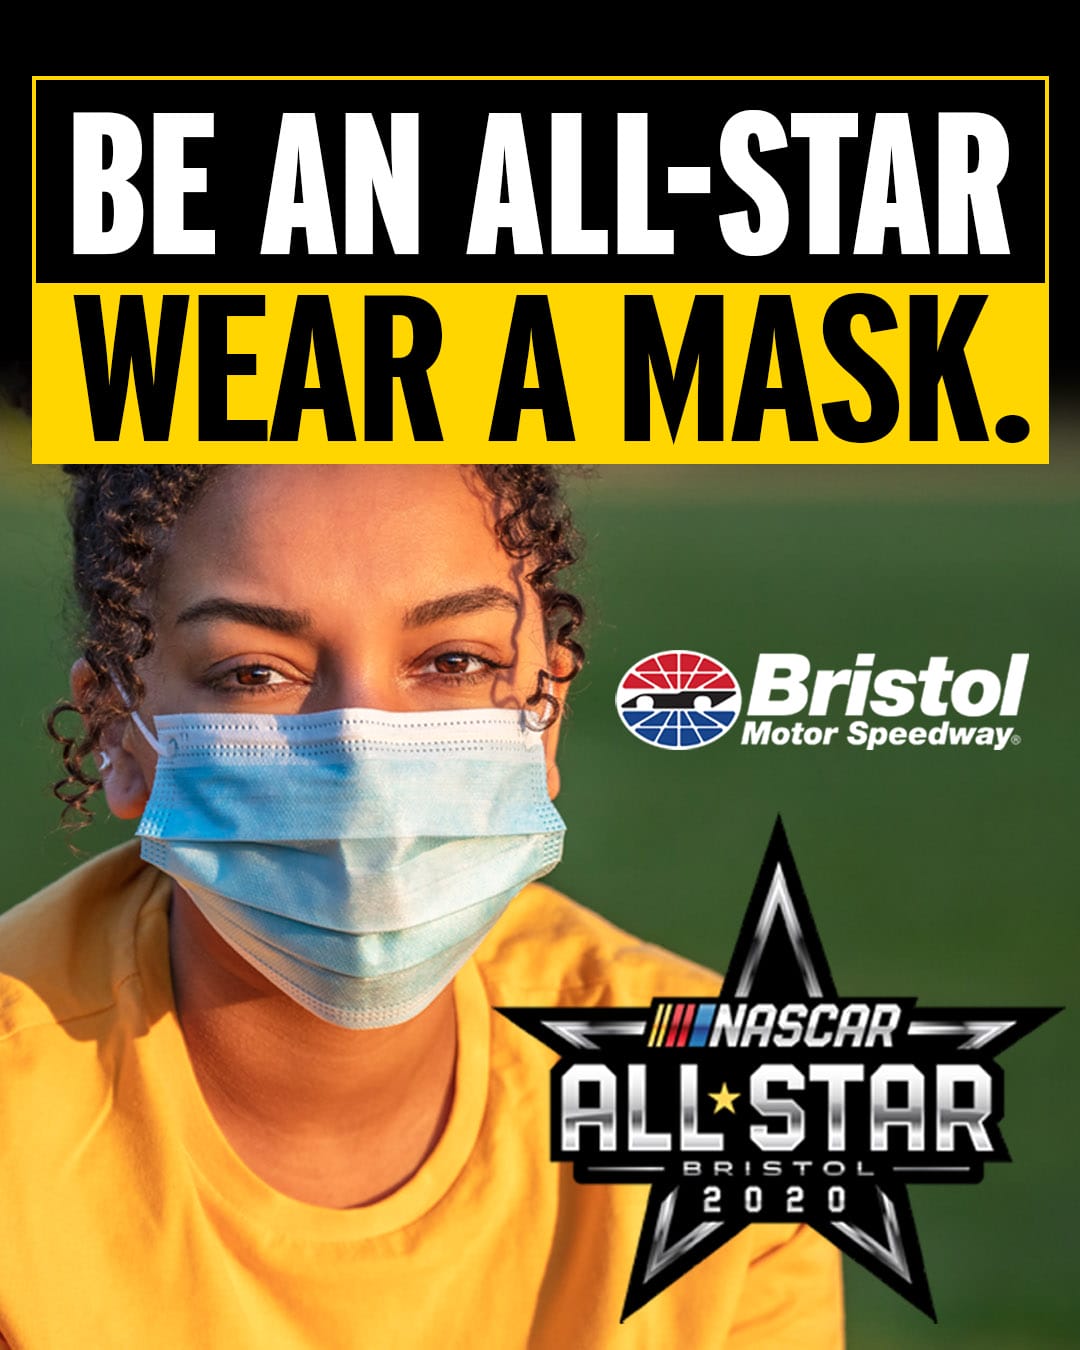 Bristol Motor Speedway ensure you wear Mask Campaign